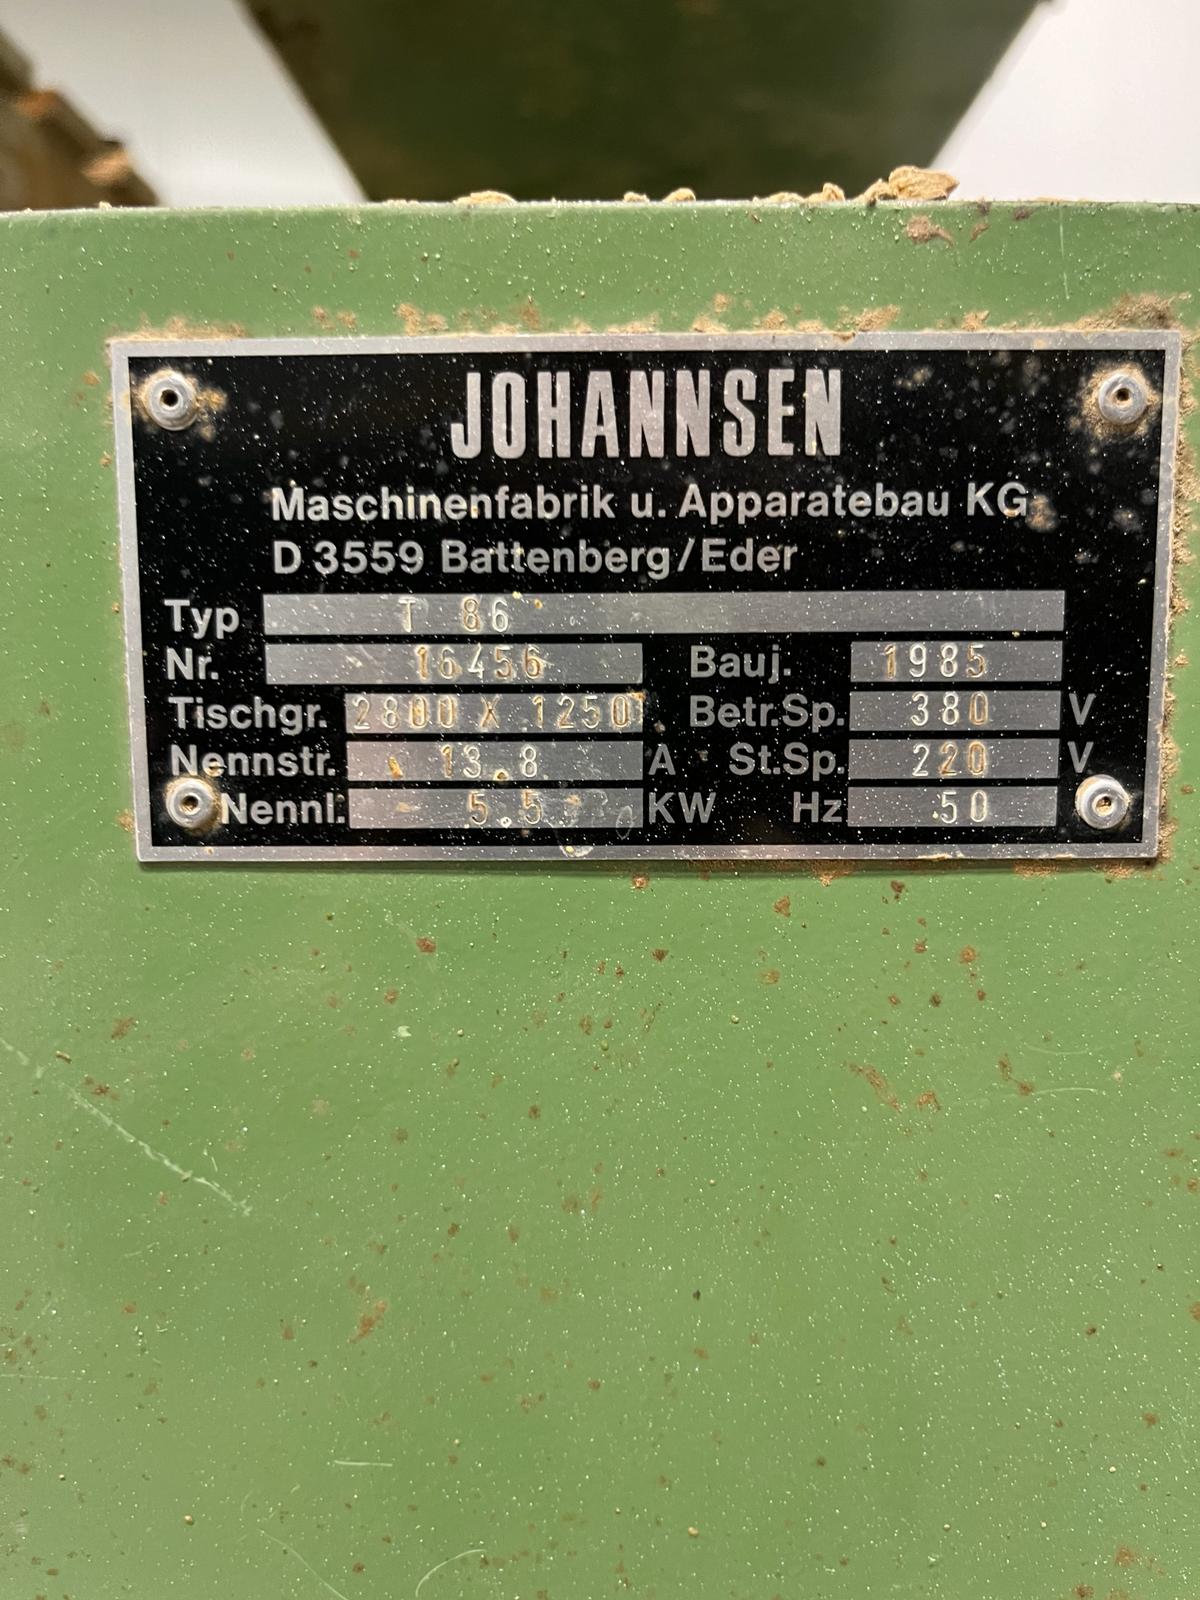 Johannsen T 86